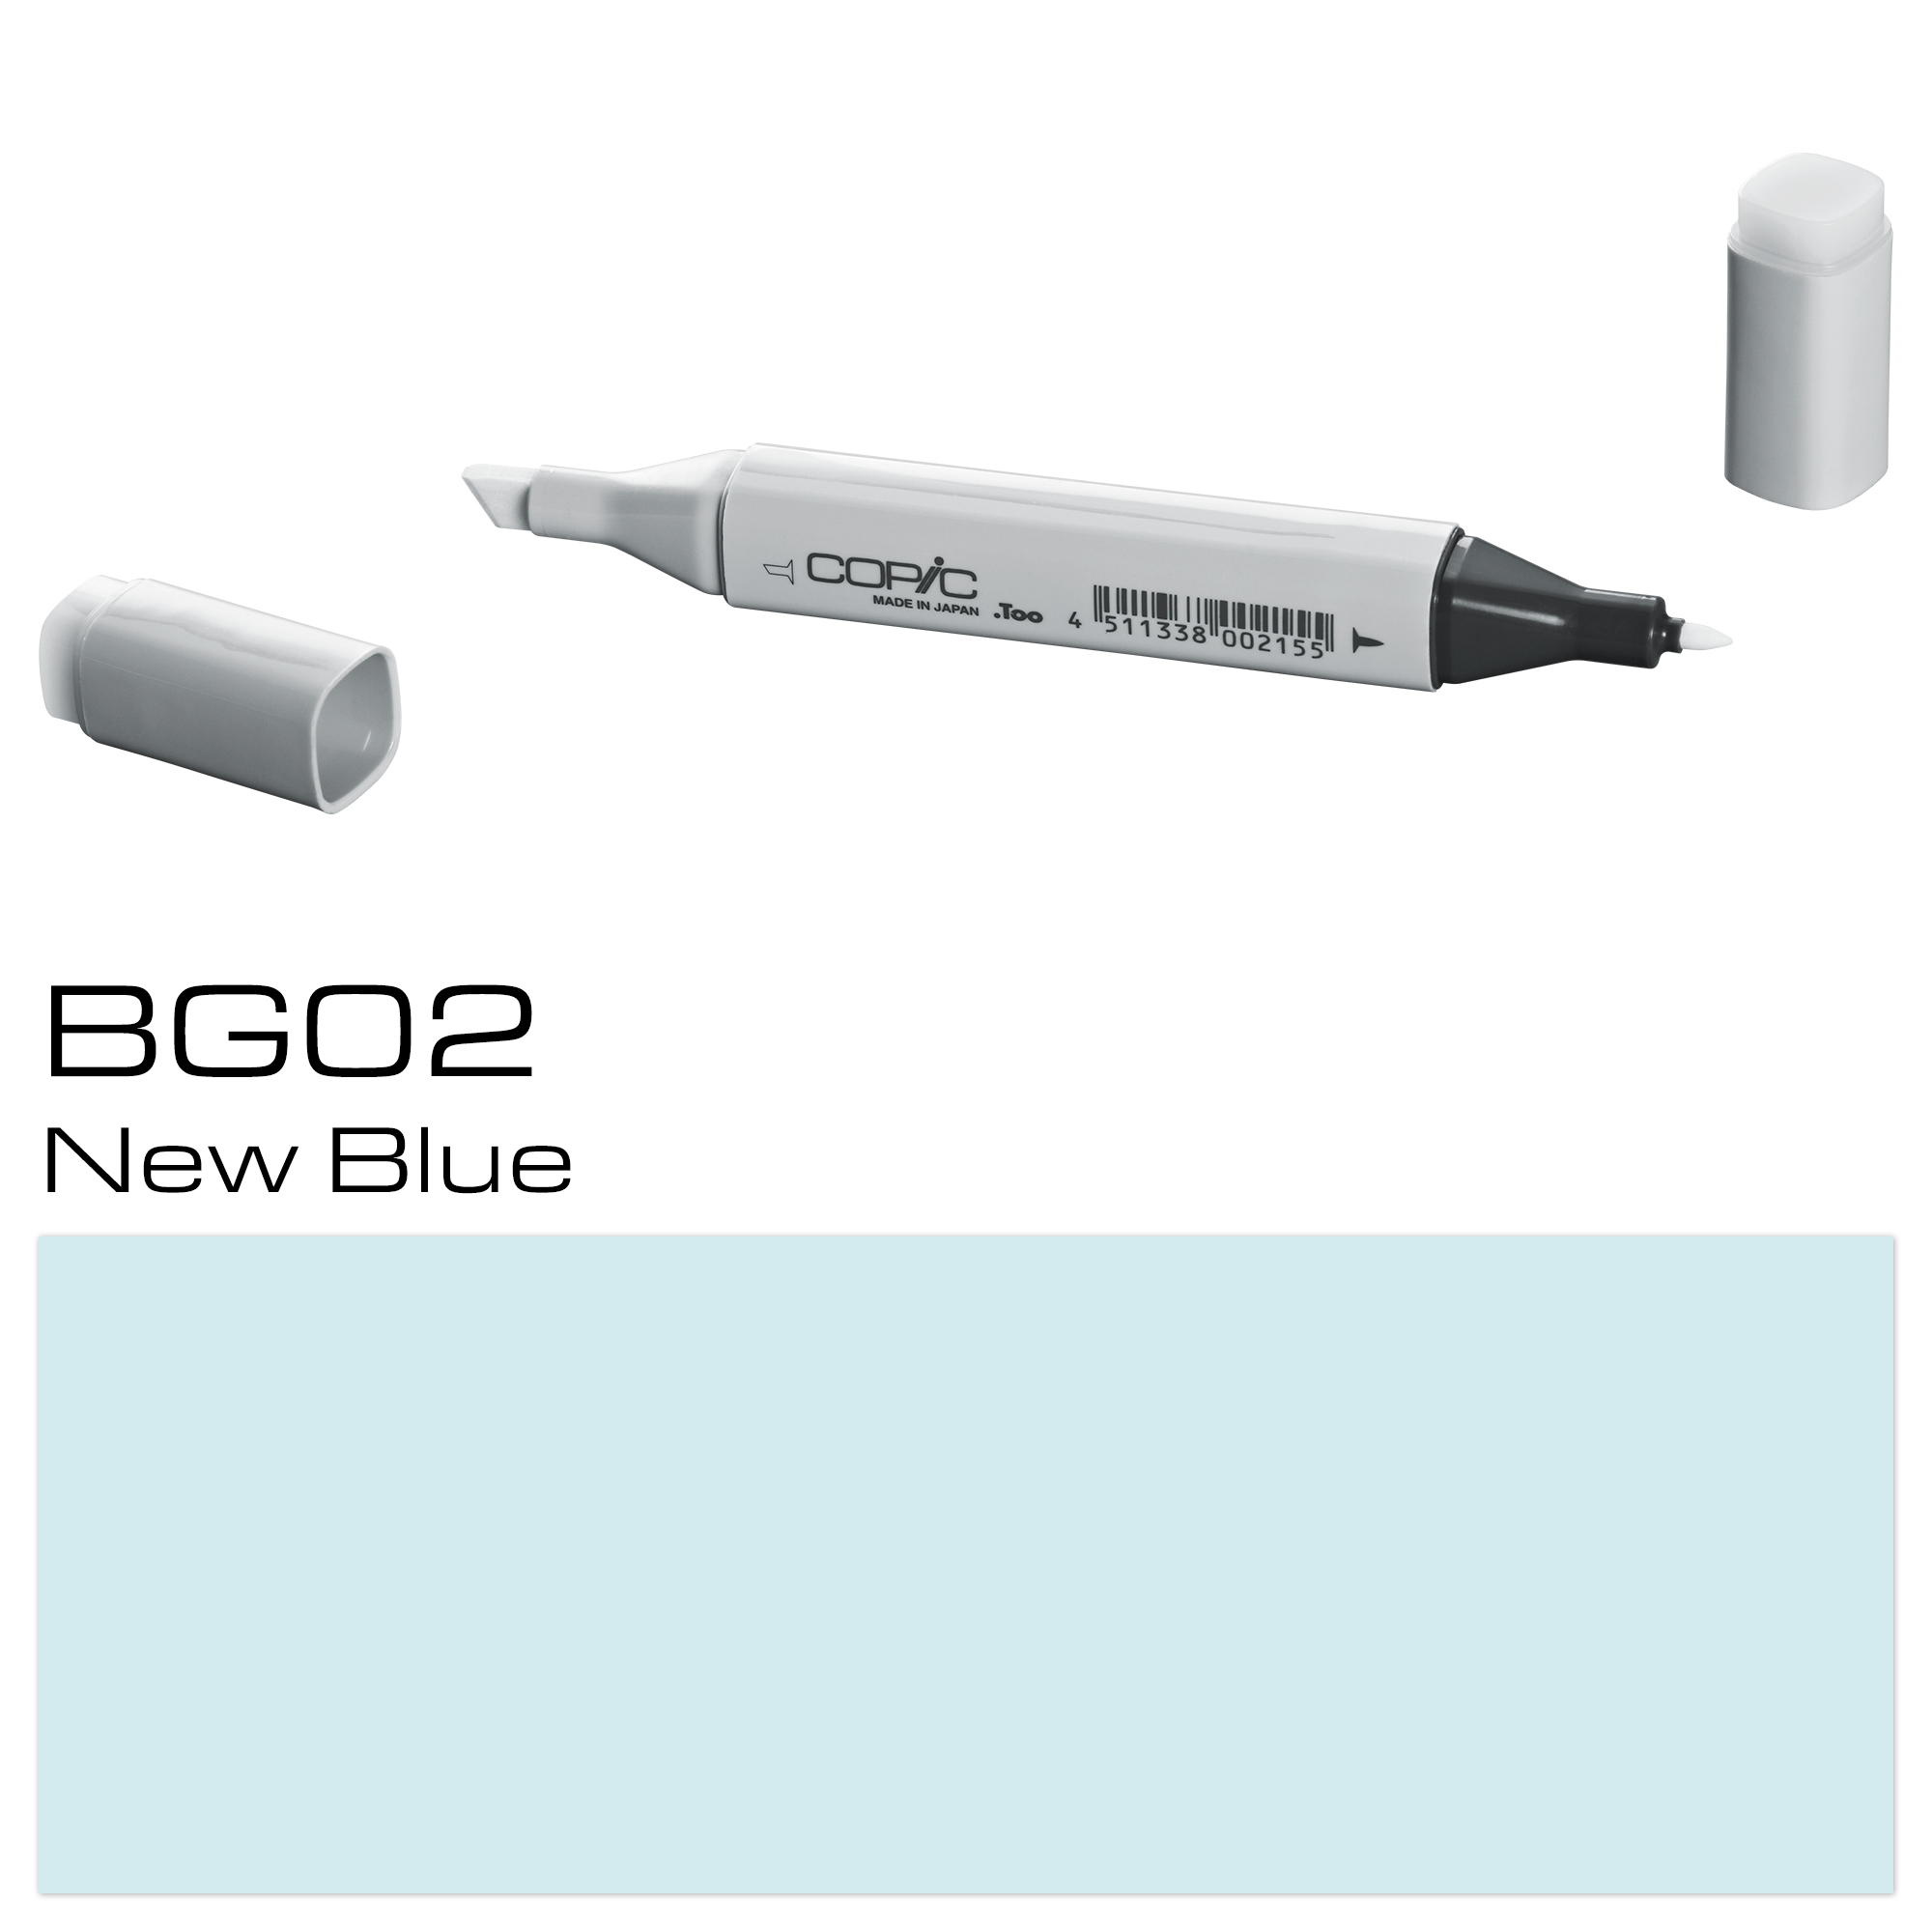 COPIC MARKER NEW BLUE BG02